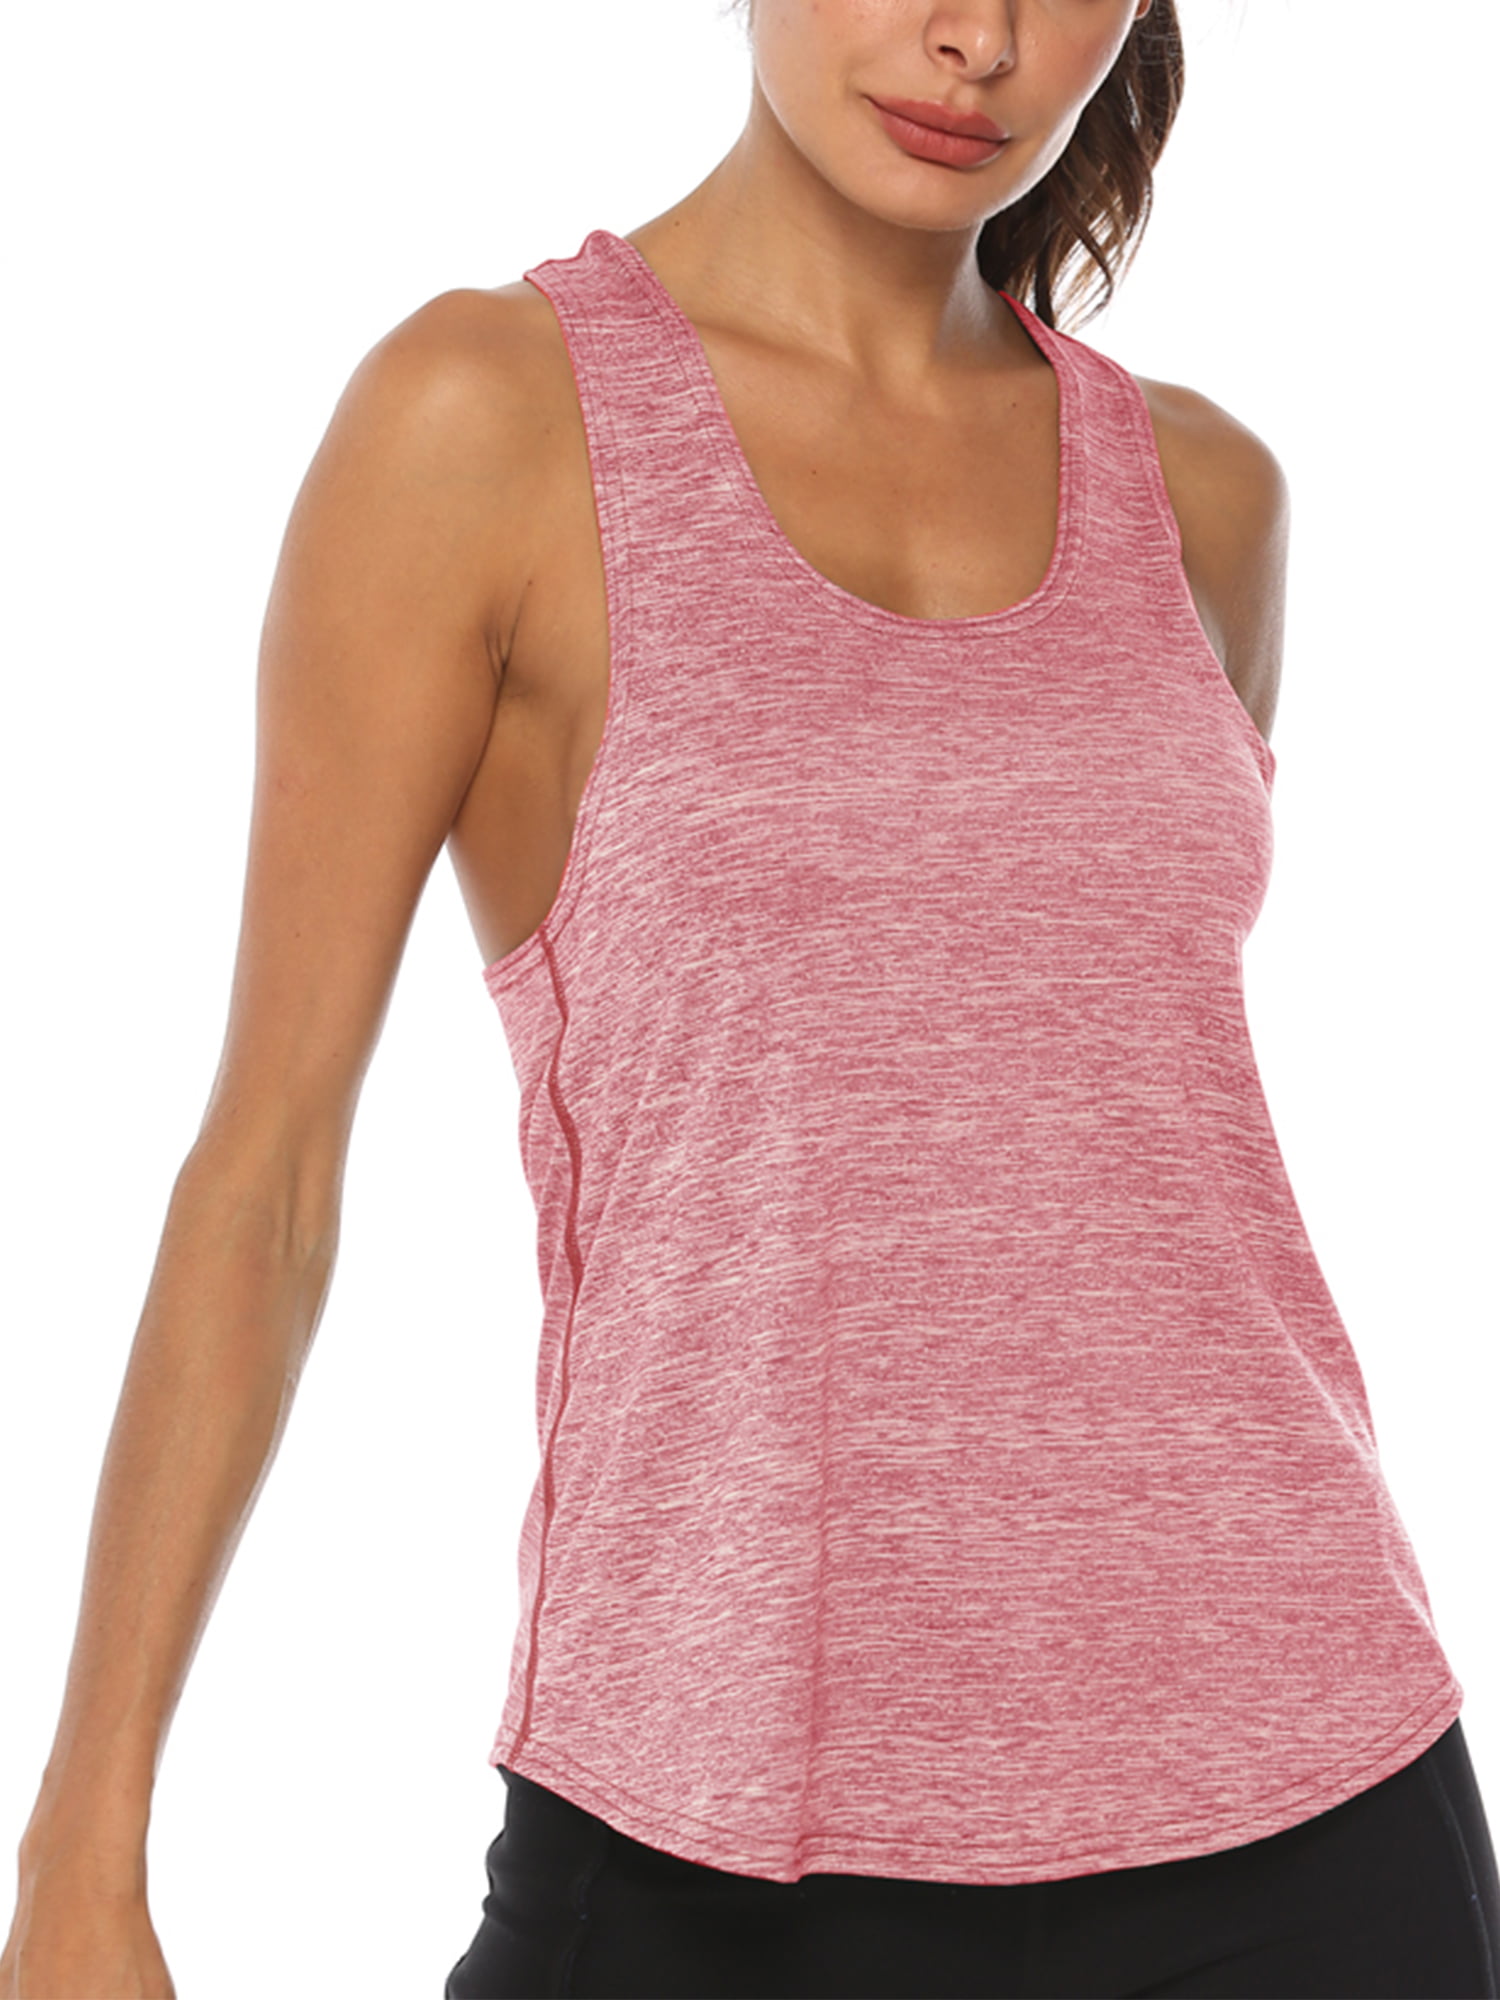 Gym Crossfit Dance Yoga T Shirt Ladies Sports Top Womens Wear Tank Vest Racer 